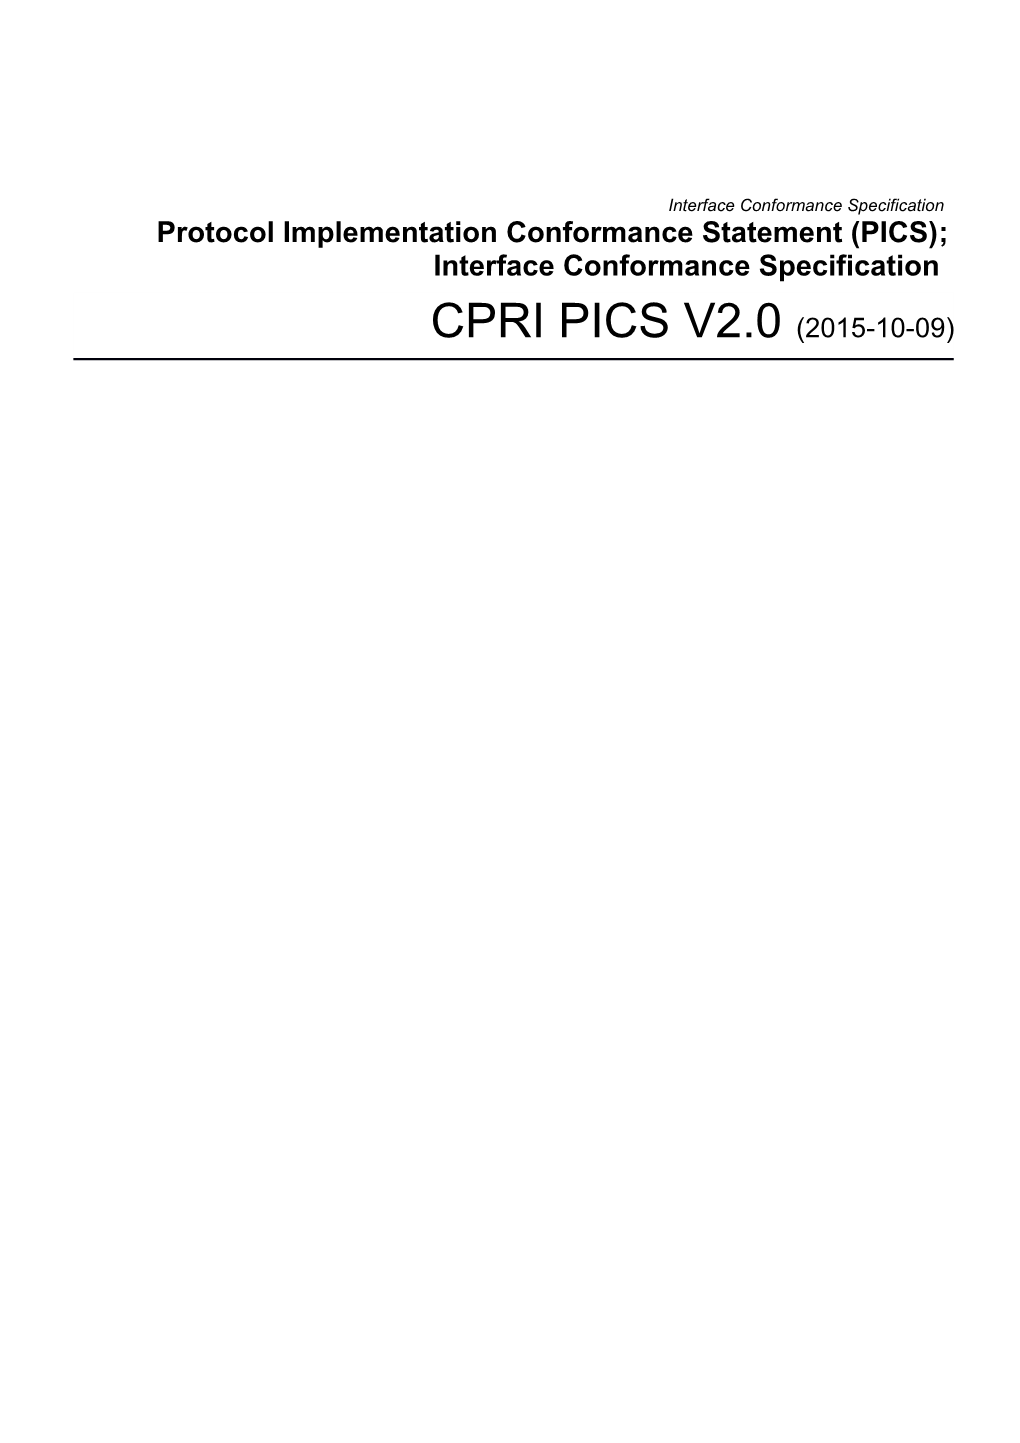 PICS for CPRI Specification V6.1